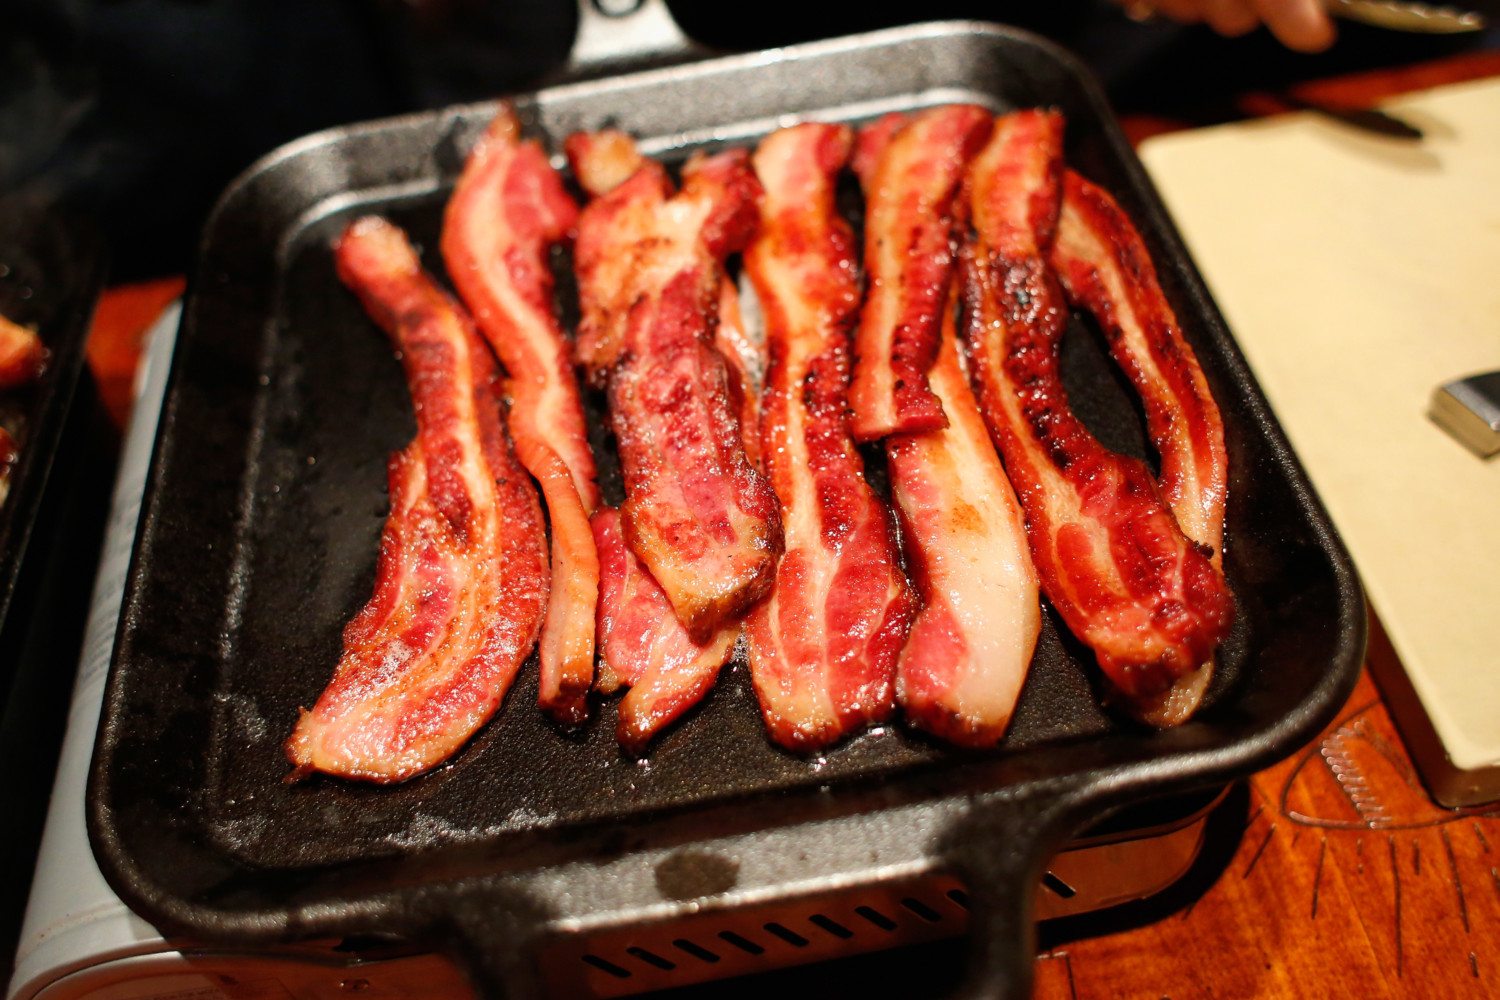 bacon photo food habits